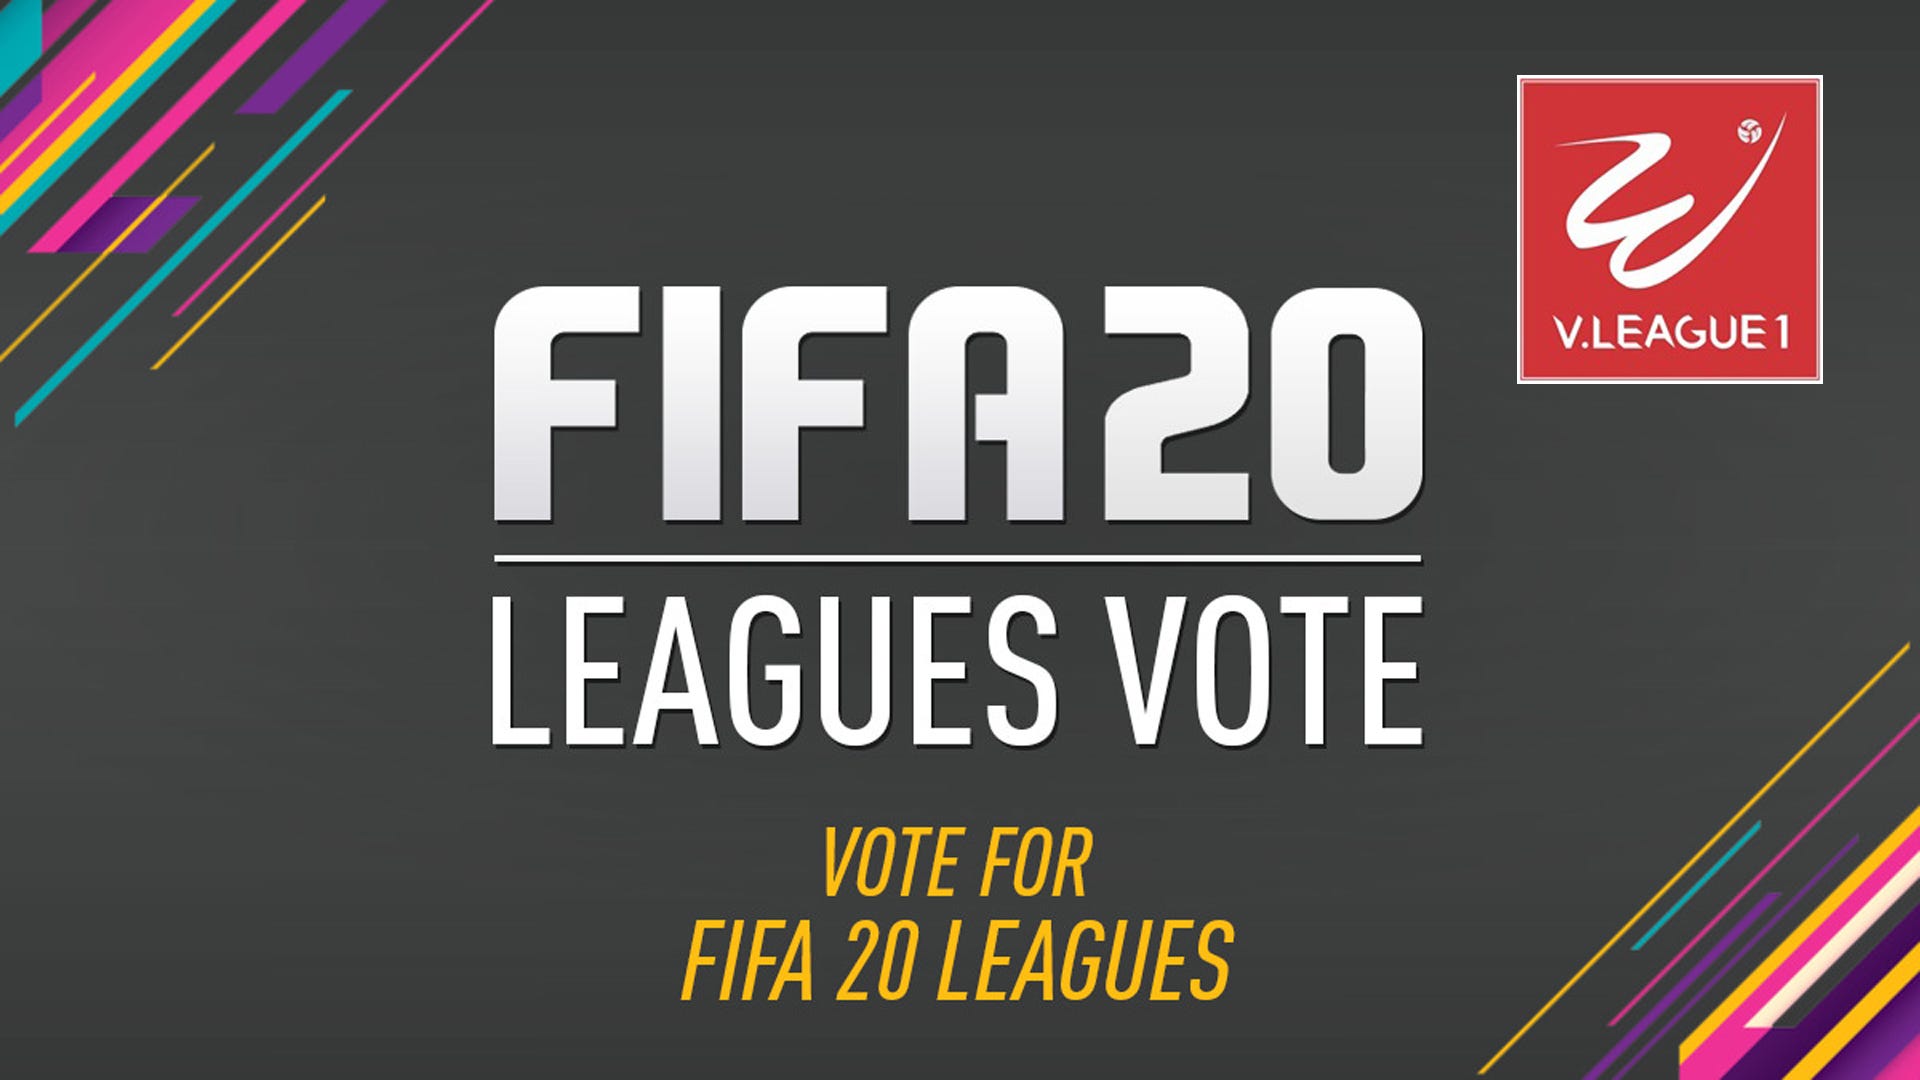 V League FIFA 20 Vote